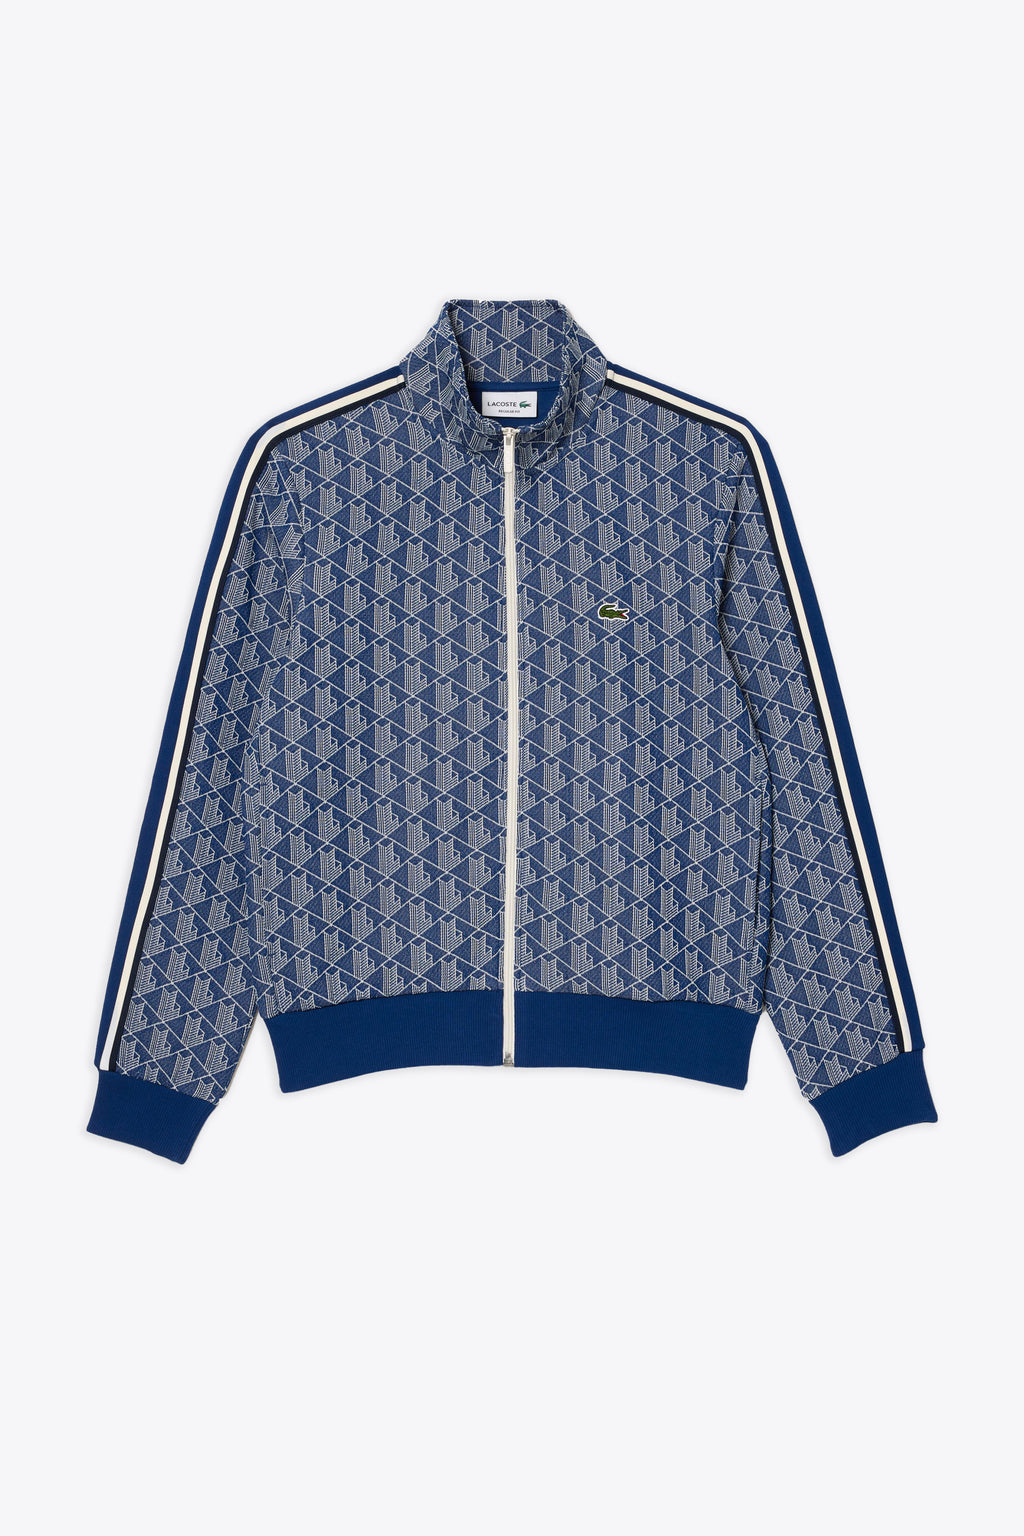 alt-image__Blue-sport-jacket-with-jacquard-motif-